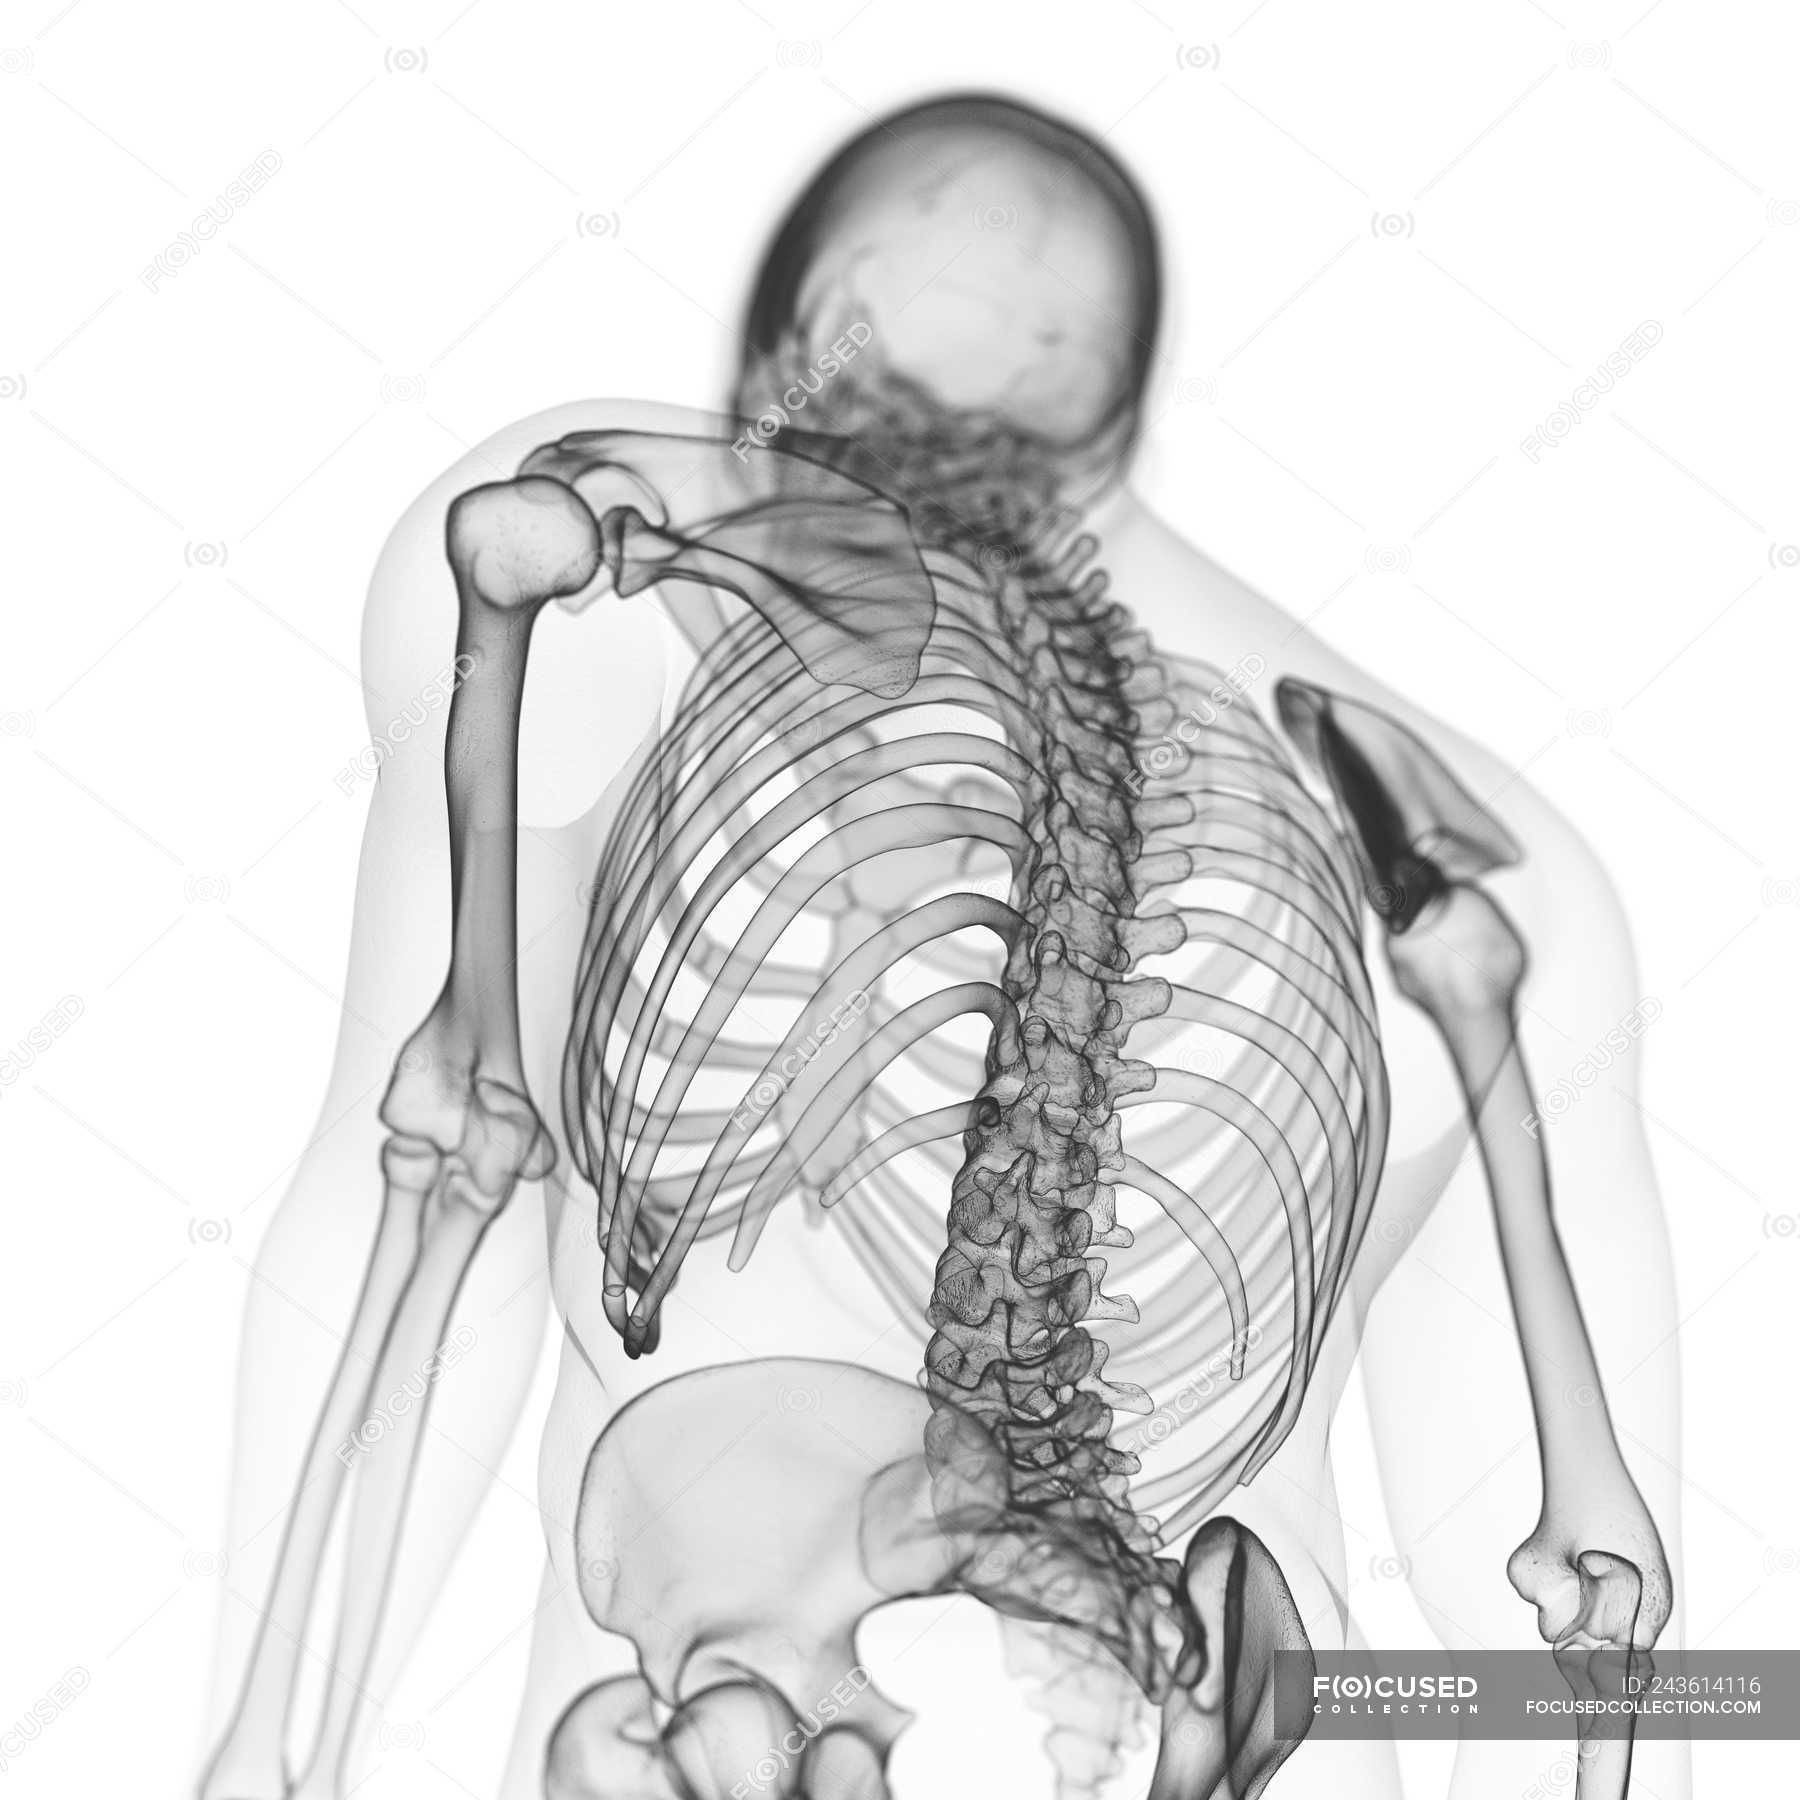 Illustration Of Back Bones In Human Skeleton On White Background Digital Skeletal Stock Photo 243614116